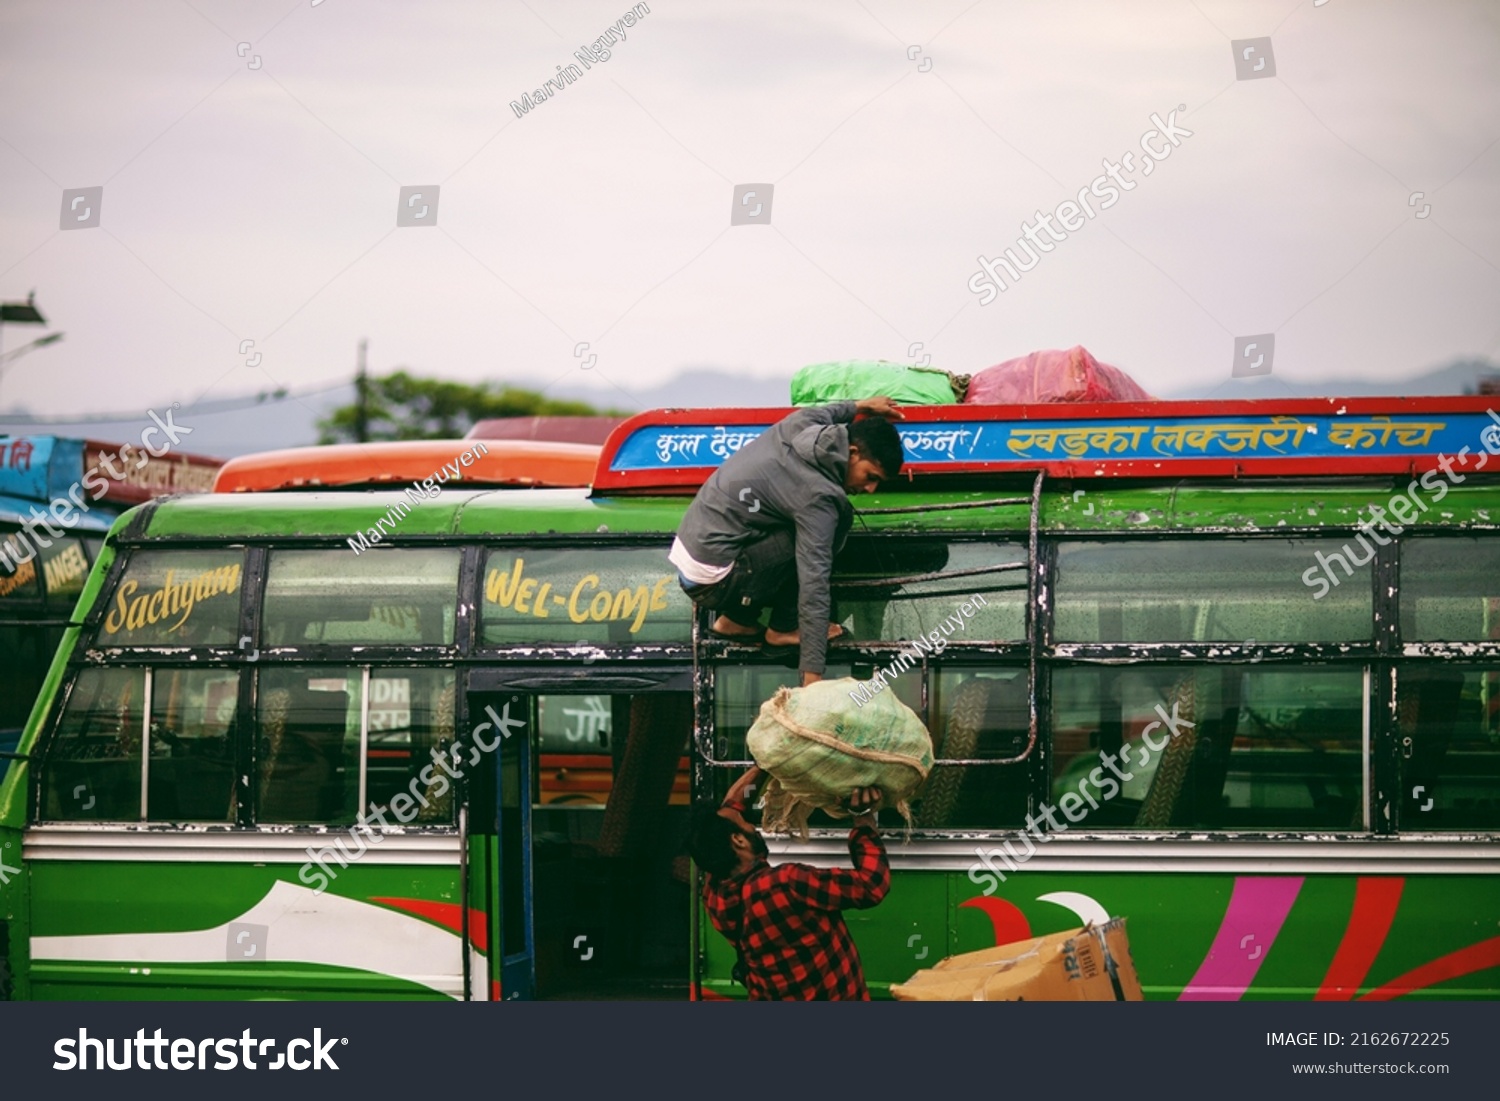 621 Kathmandu Bus Immagini Foto Stock E Grafica Vettoriale Shutterstock